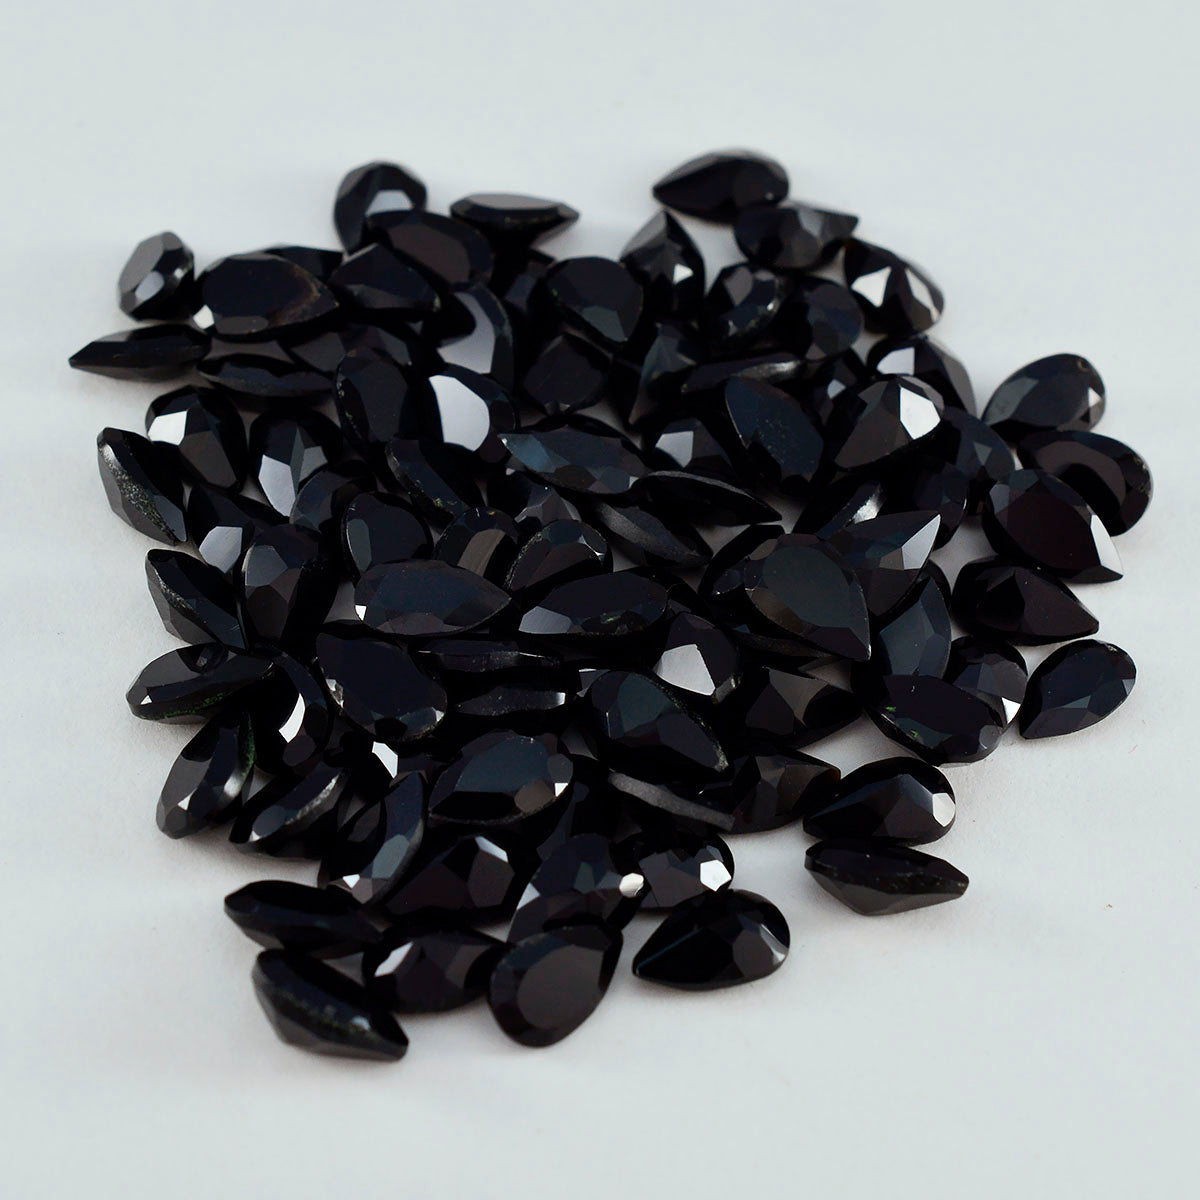 Riyogems 1PC Natural Black Onyx Faceted 4x6 mm Pear Shape cute Quality Loose Stone